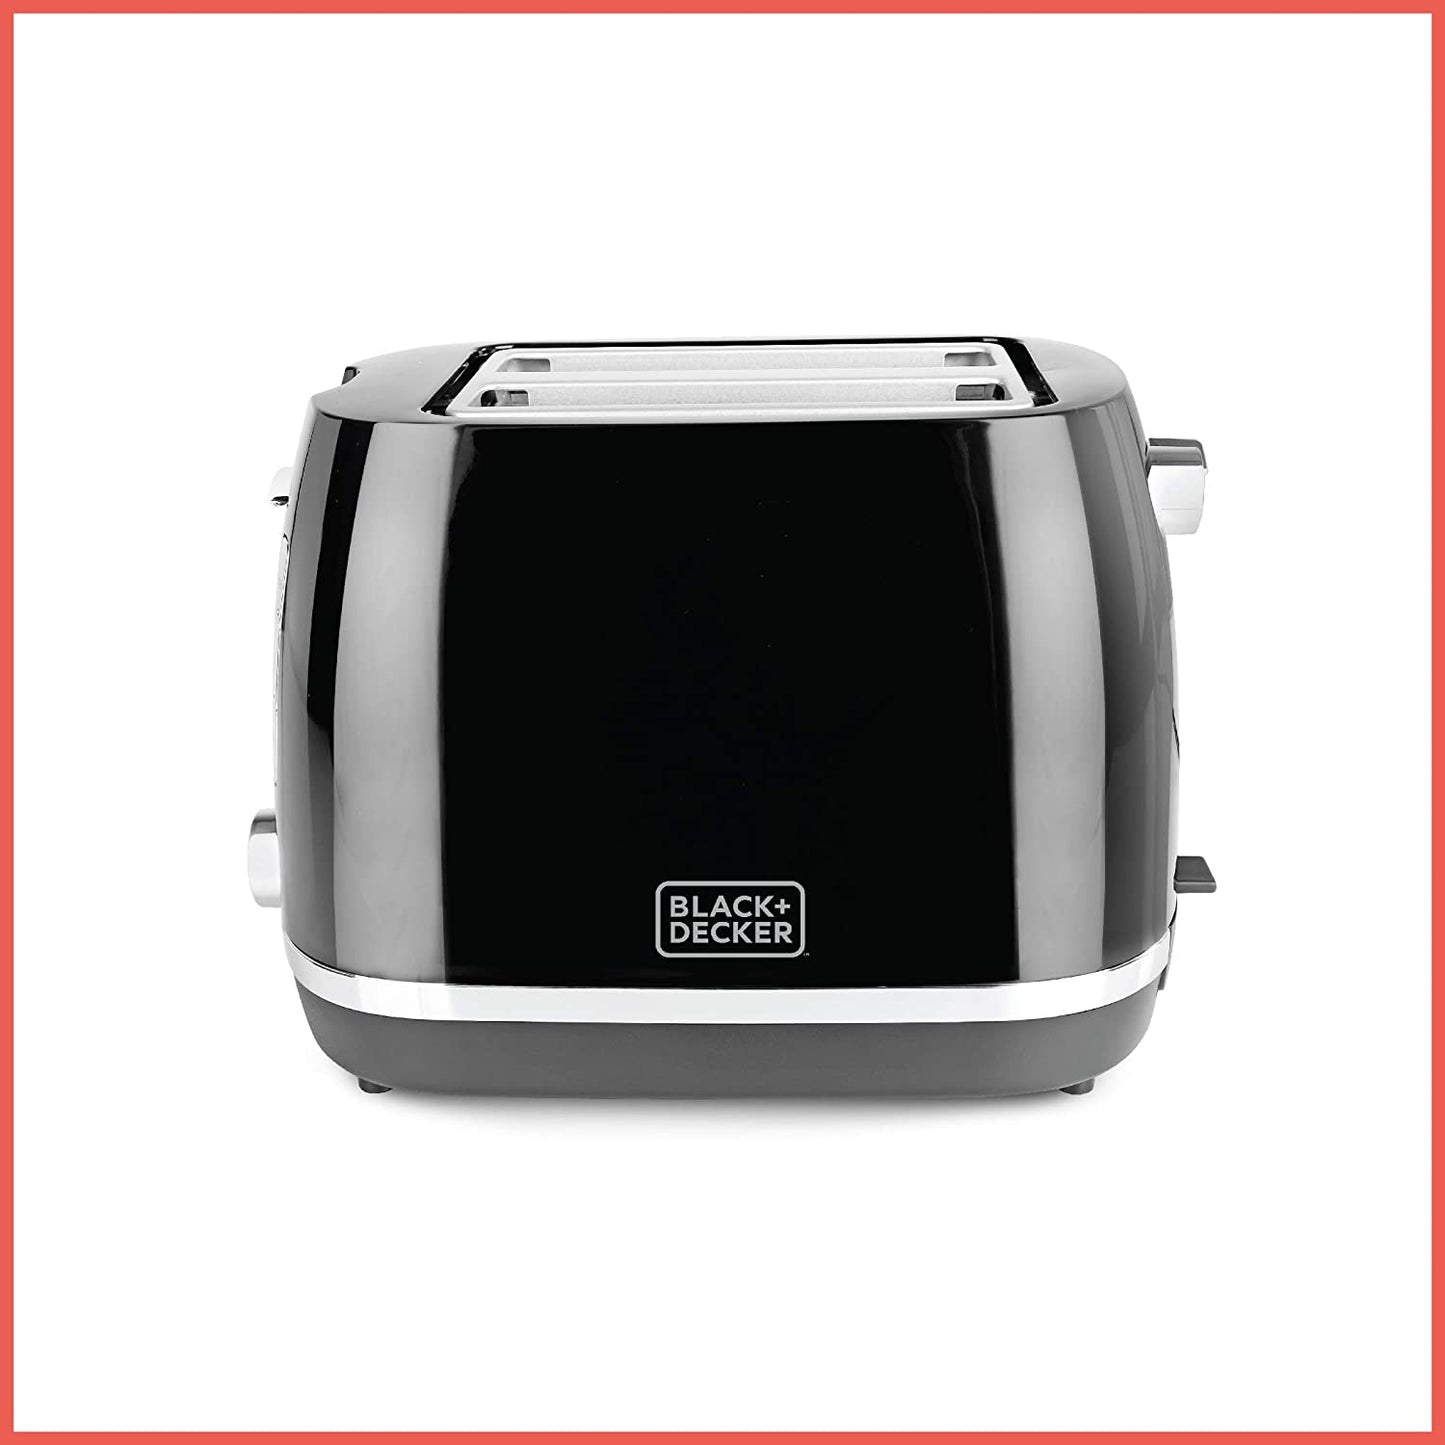 BLACK+DECKER 2 Slice Pop-up Toaster 870-Watt